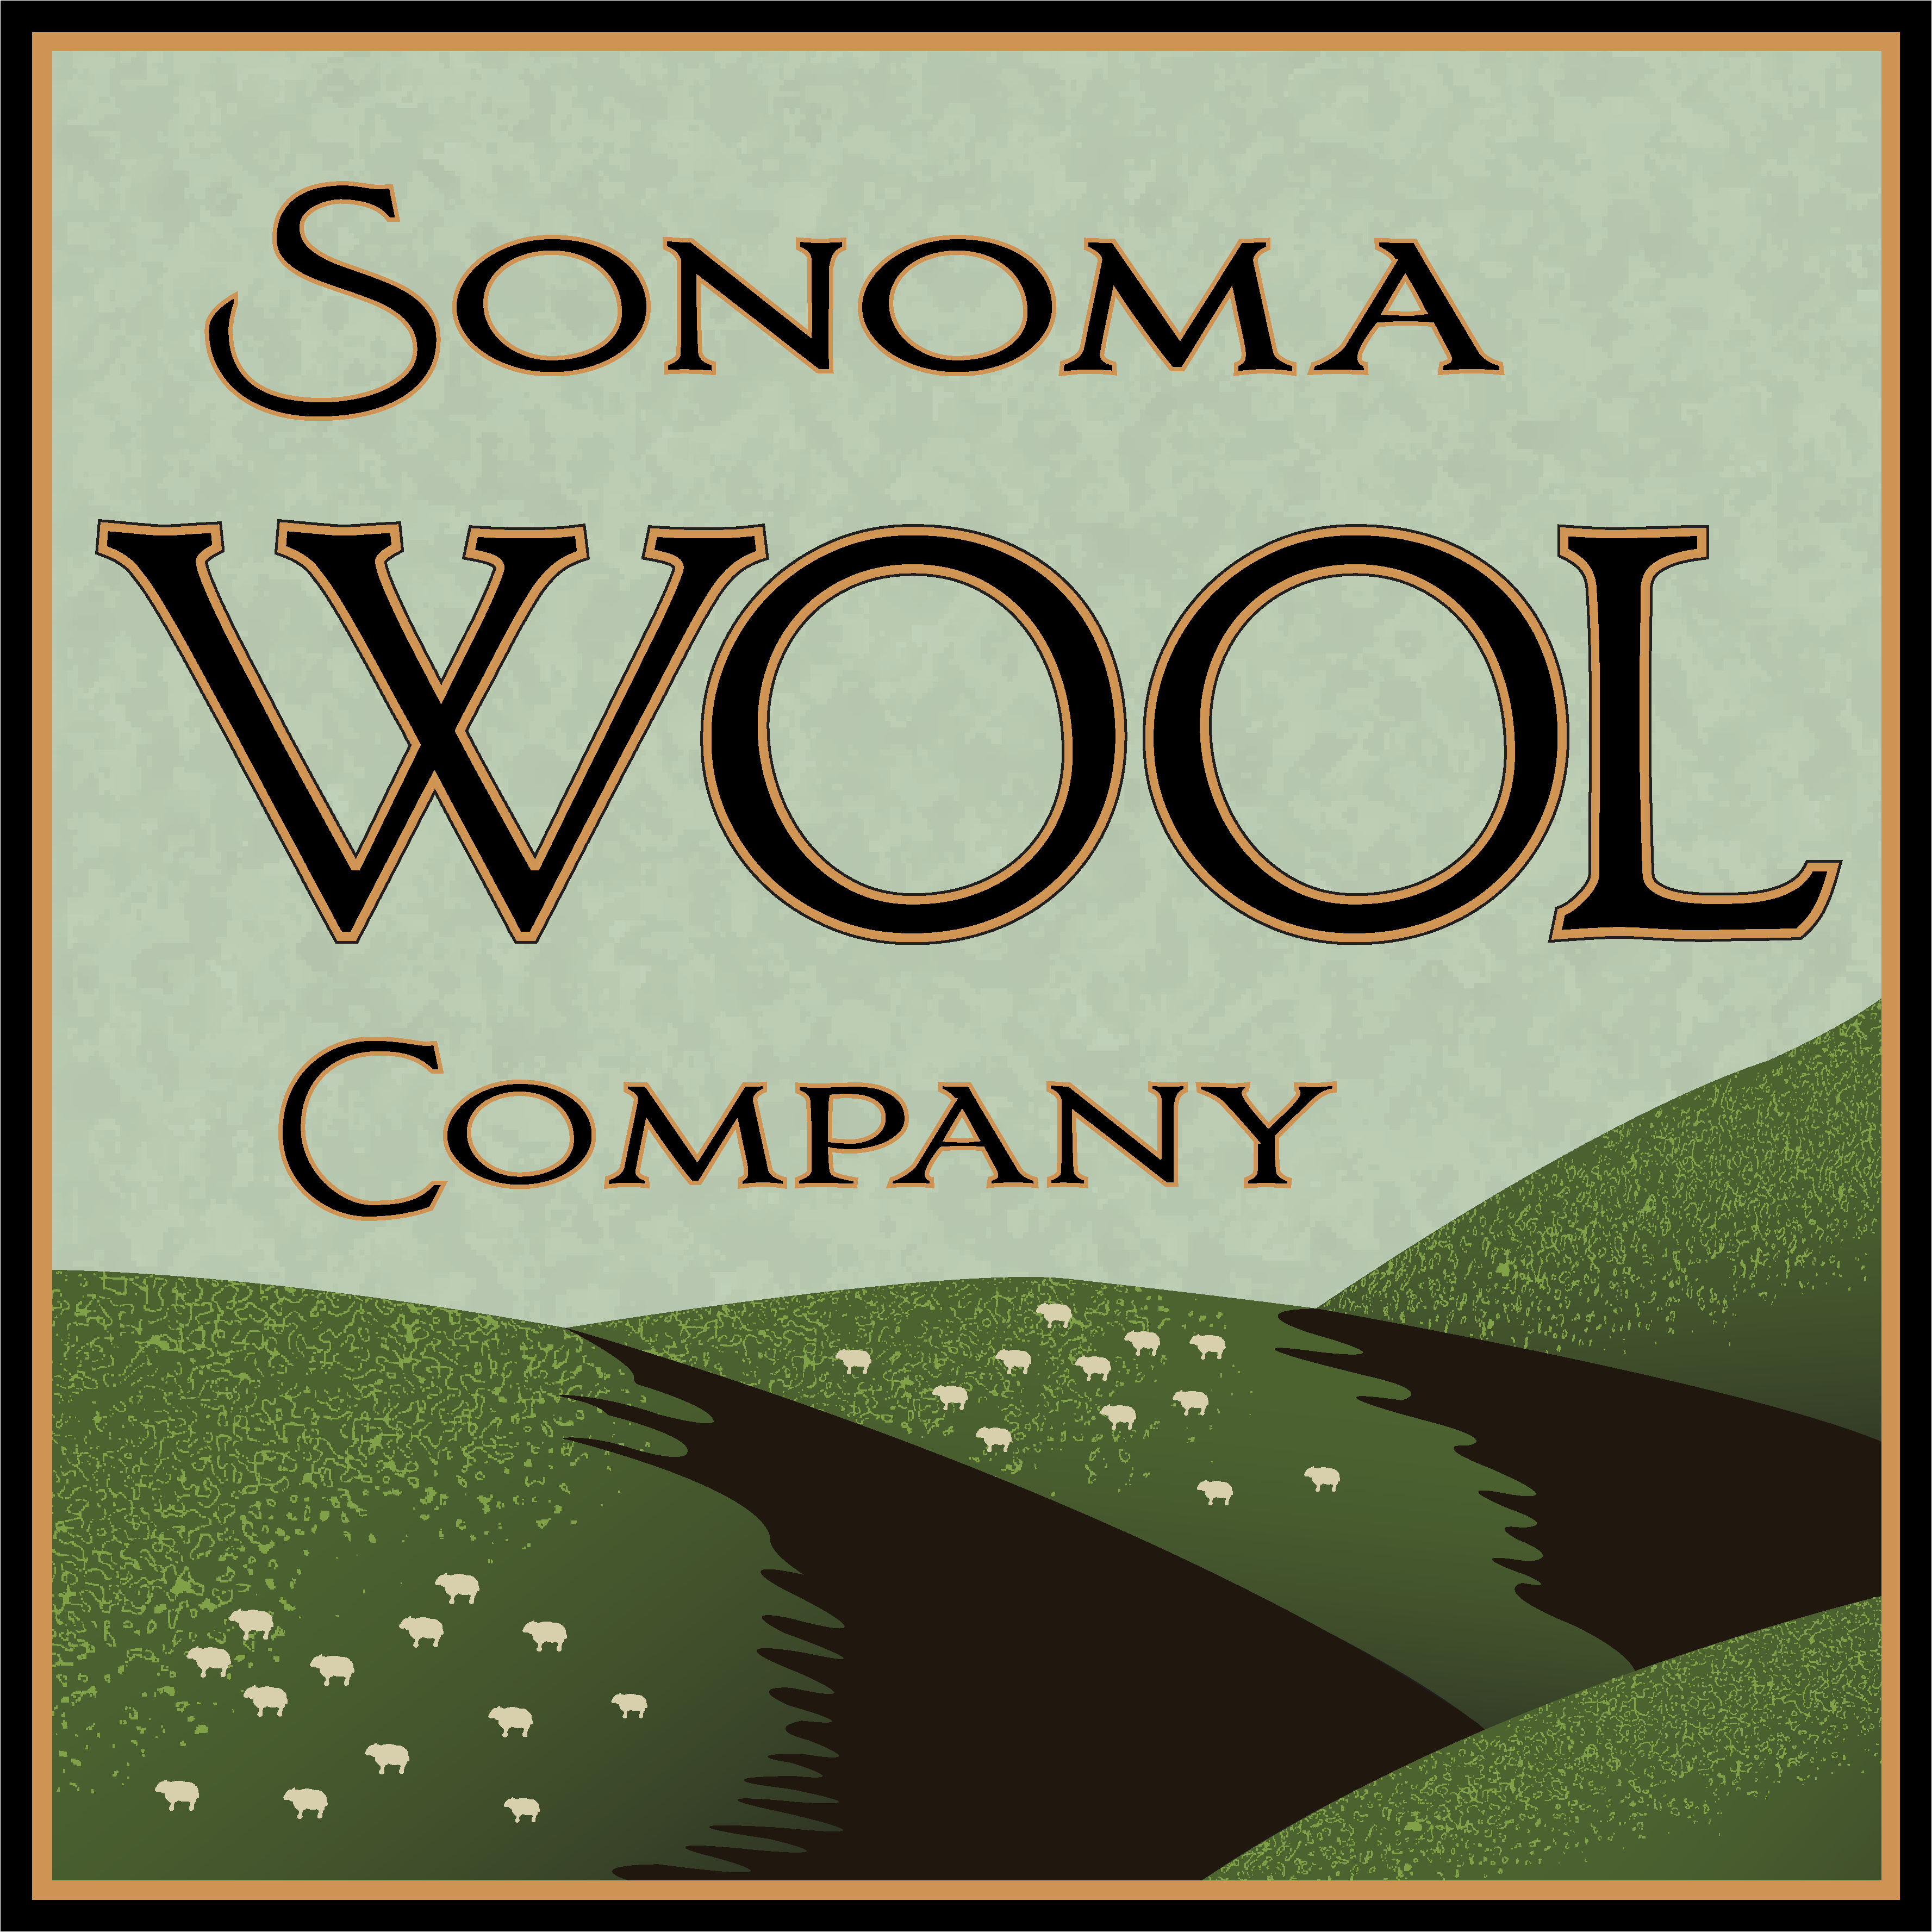 Sonoma Wool Company Logo - sheep grazing on rolling green hills with "Sonoma Wool Company" in text above.